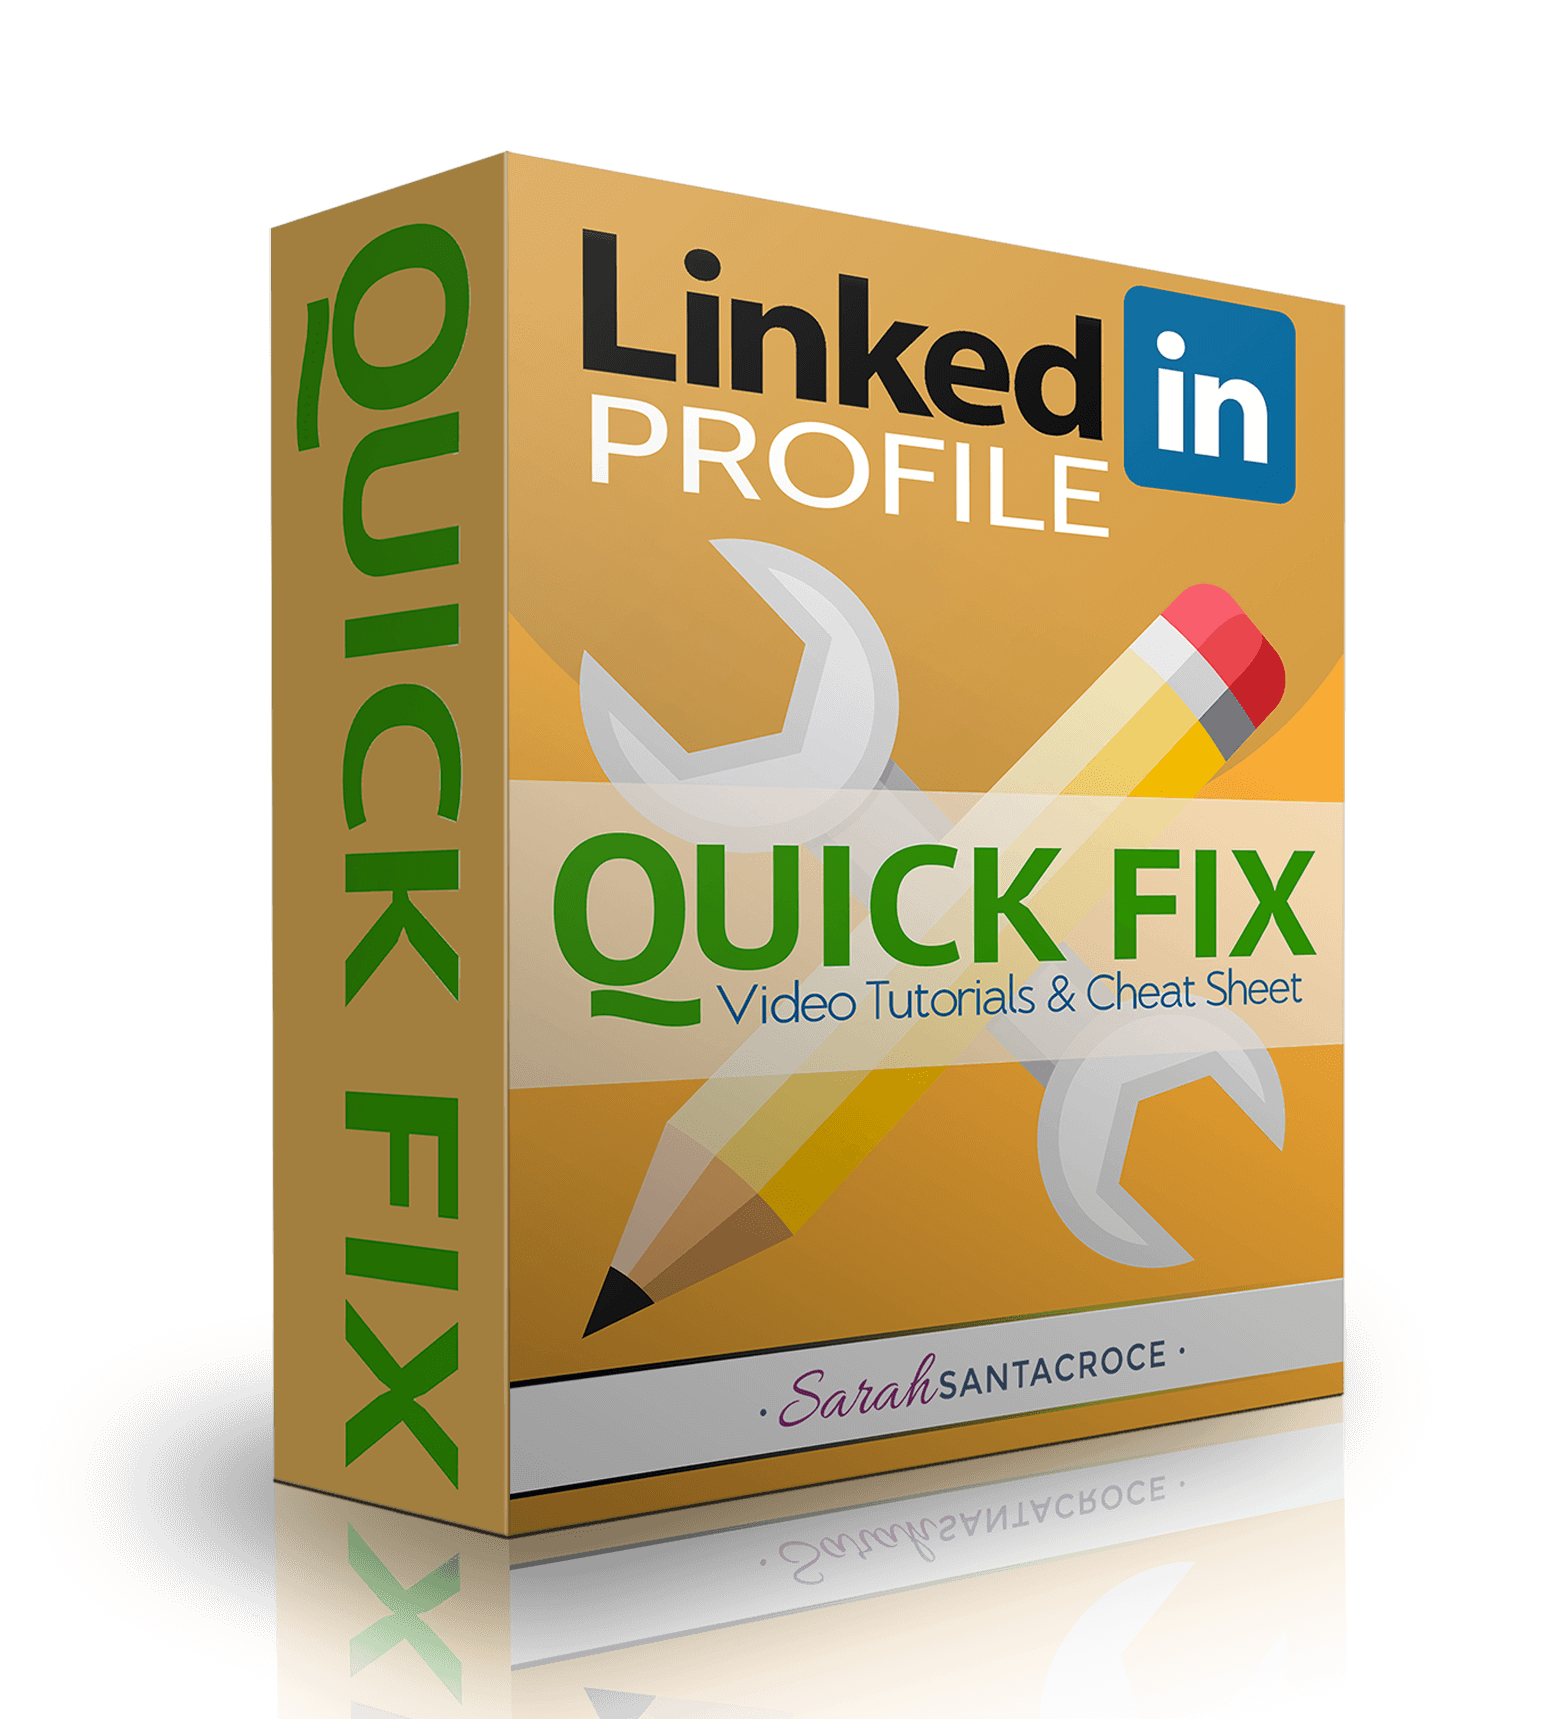 LinkedIn Quick Fix Box